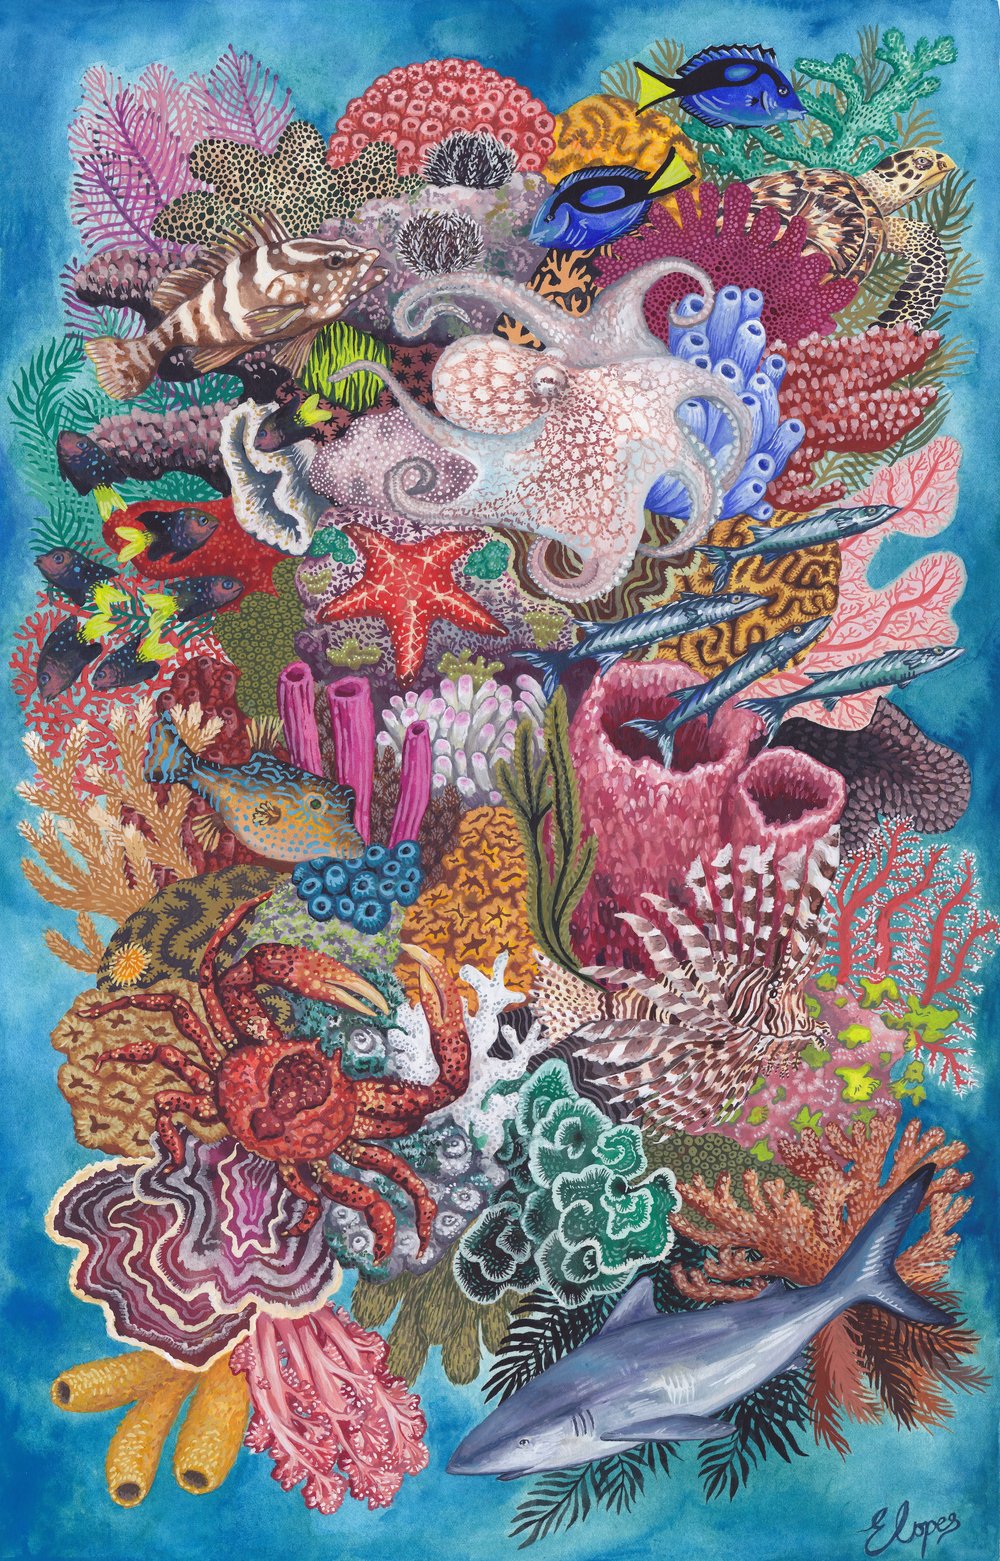 Bahamas Reef Print.jpg